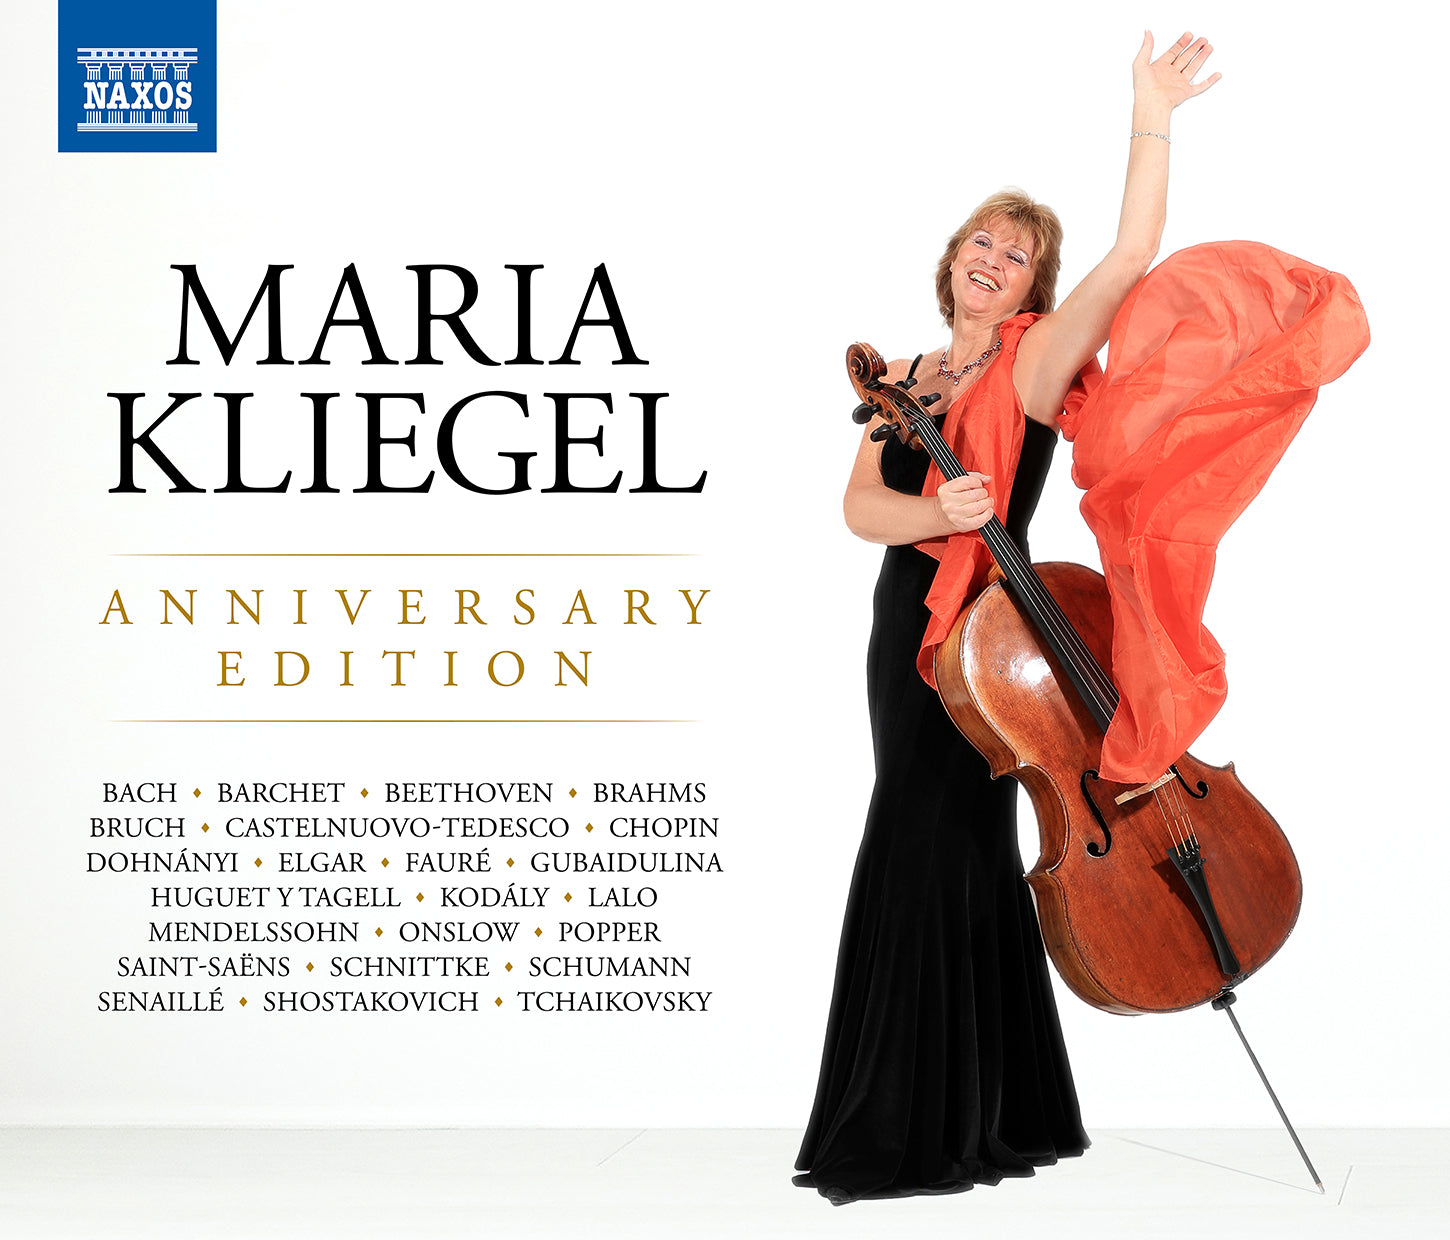 Maria Kliegel 70th Anniversary Edition